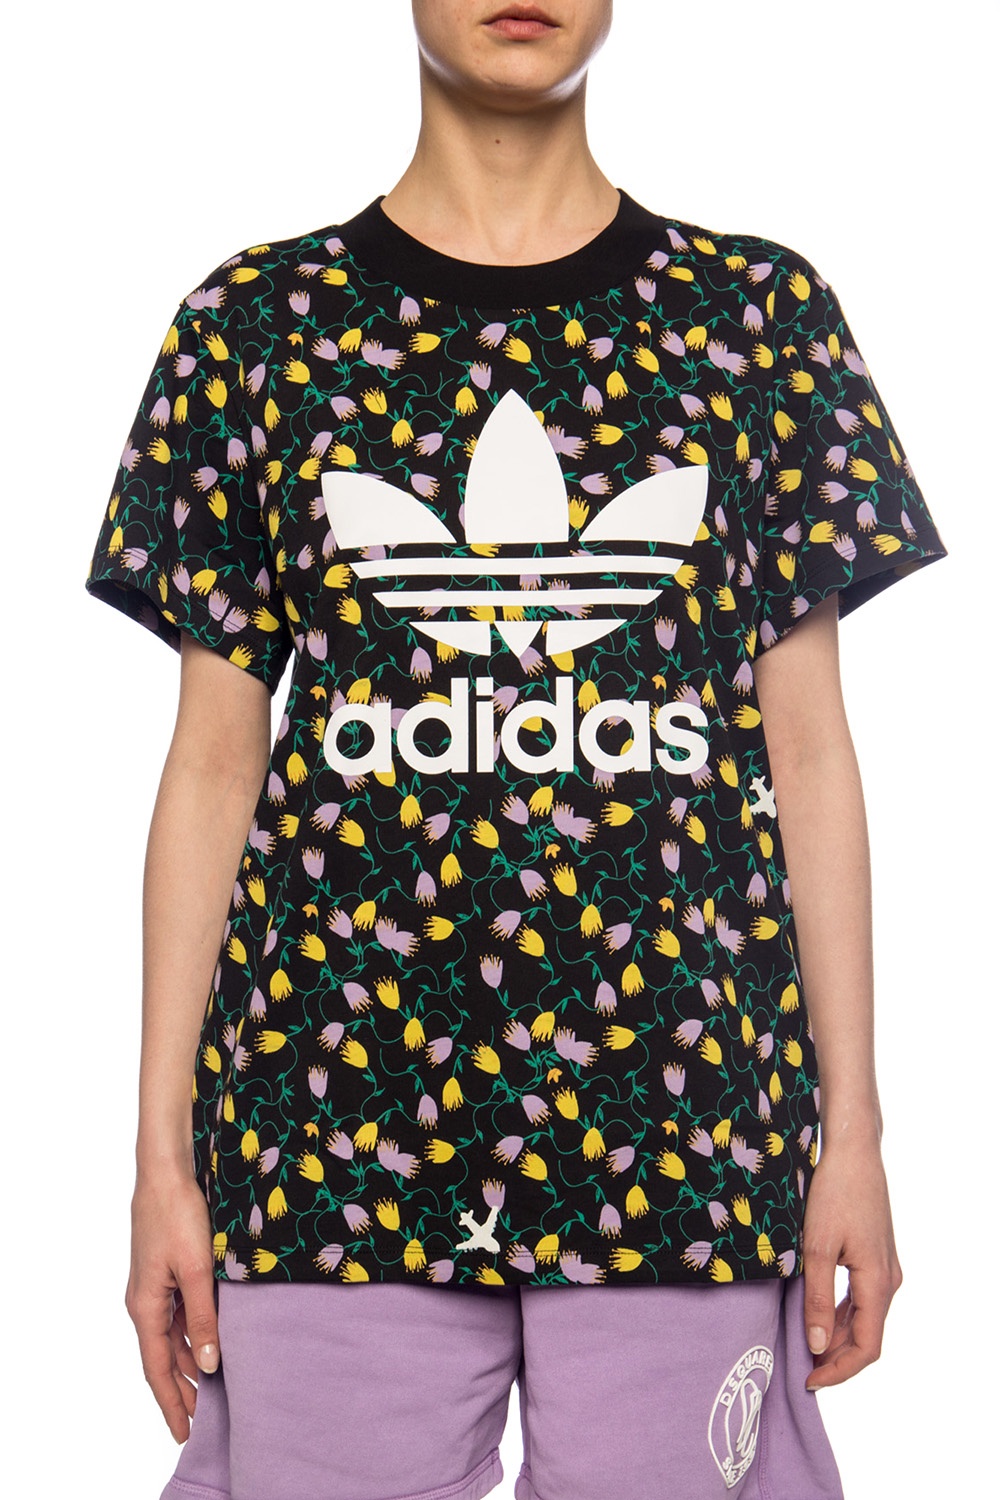 adidas pineapple t shirt